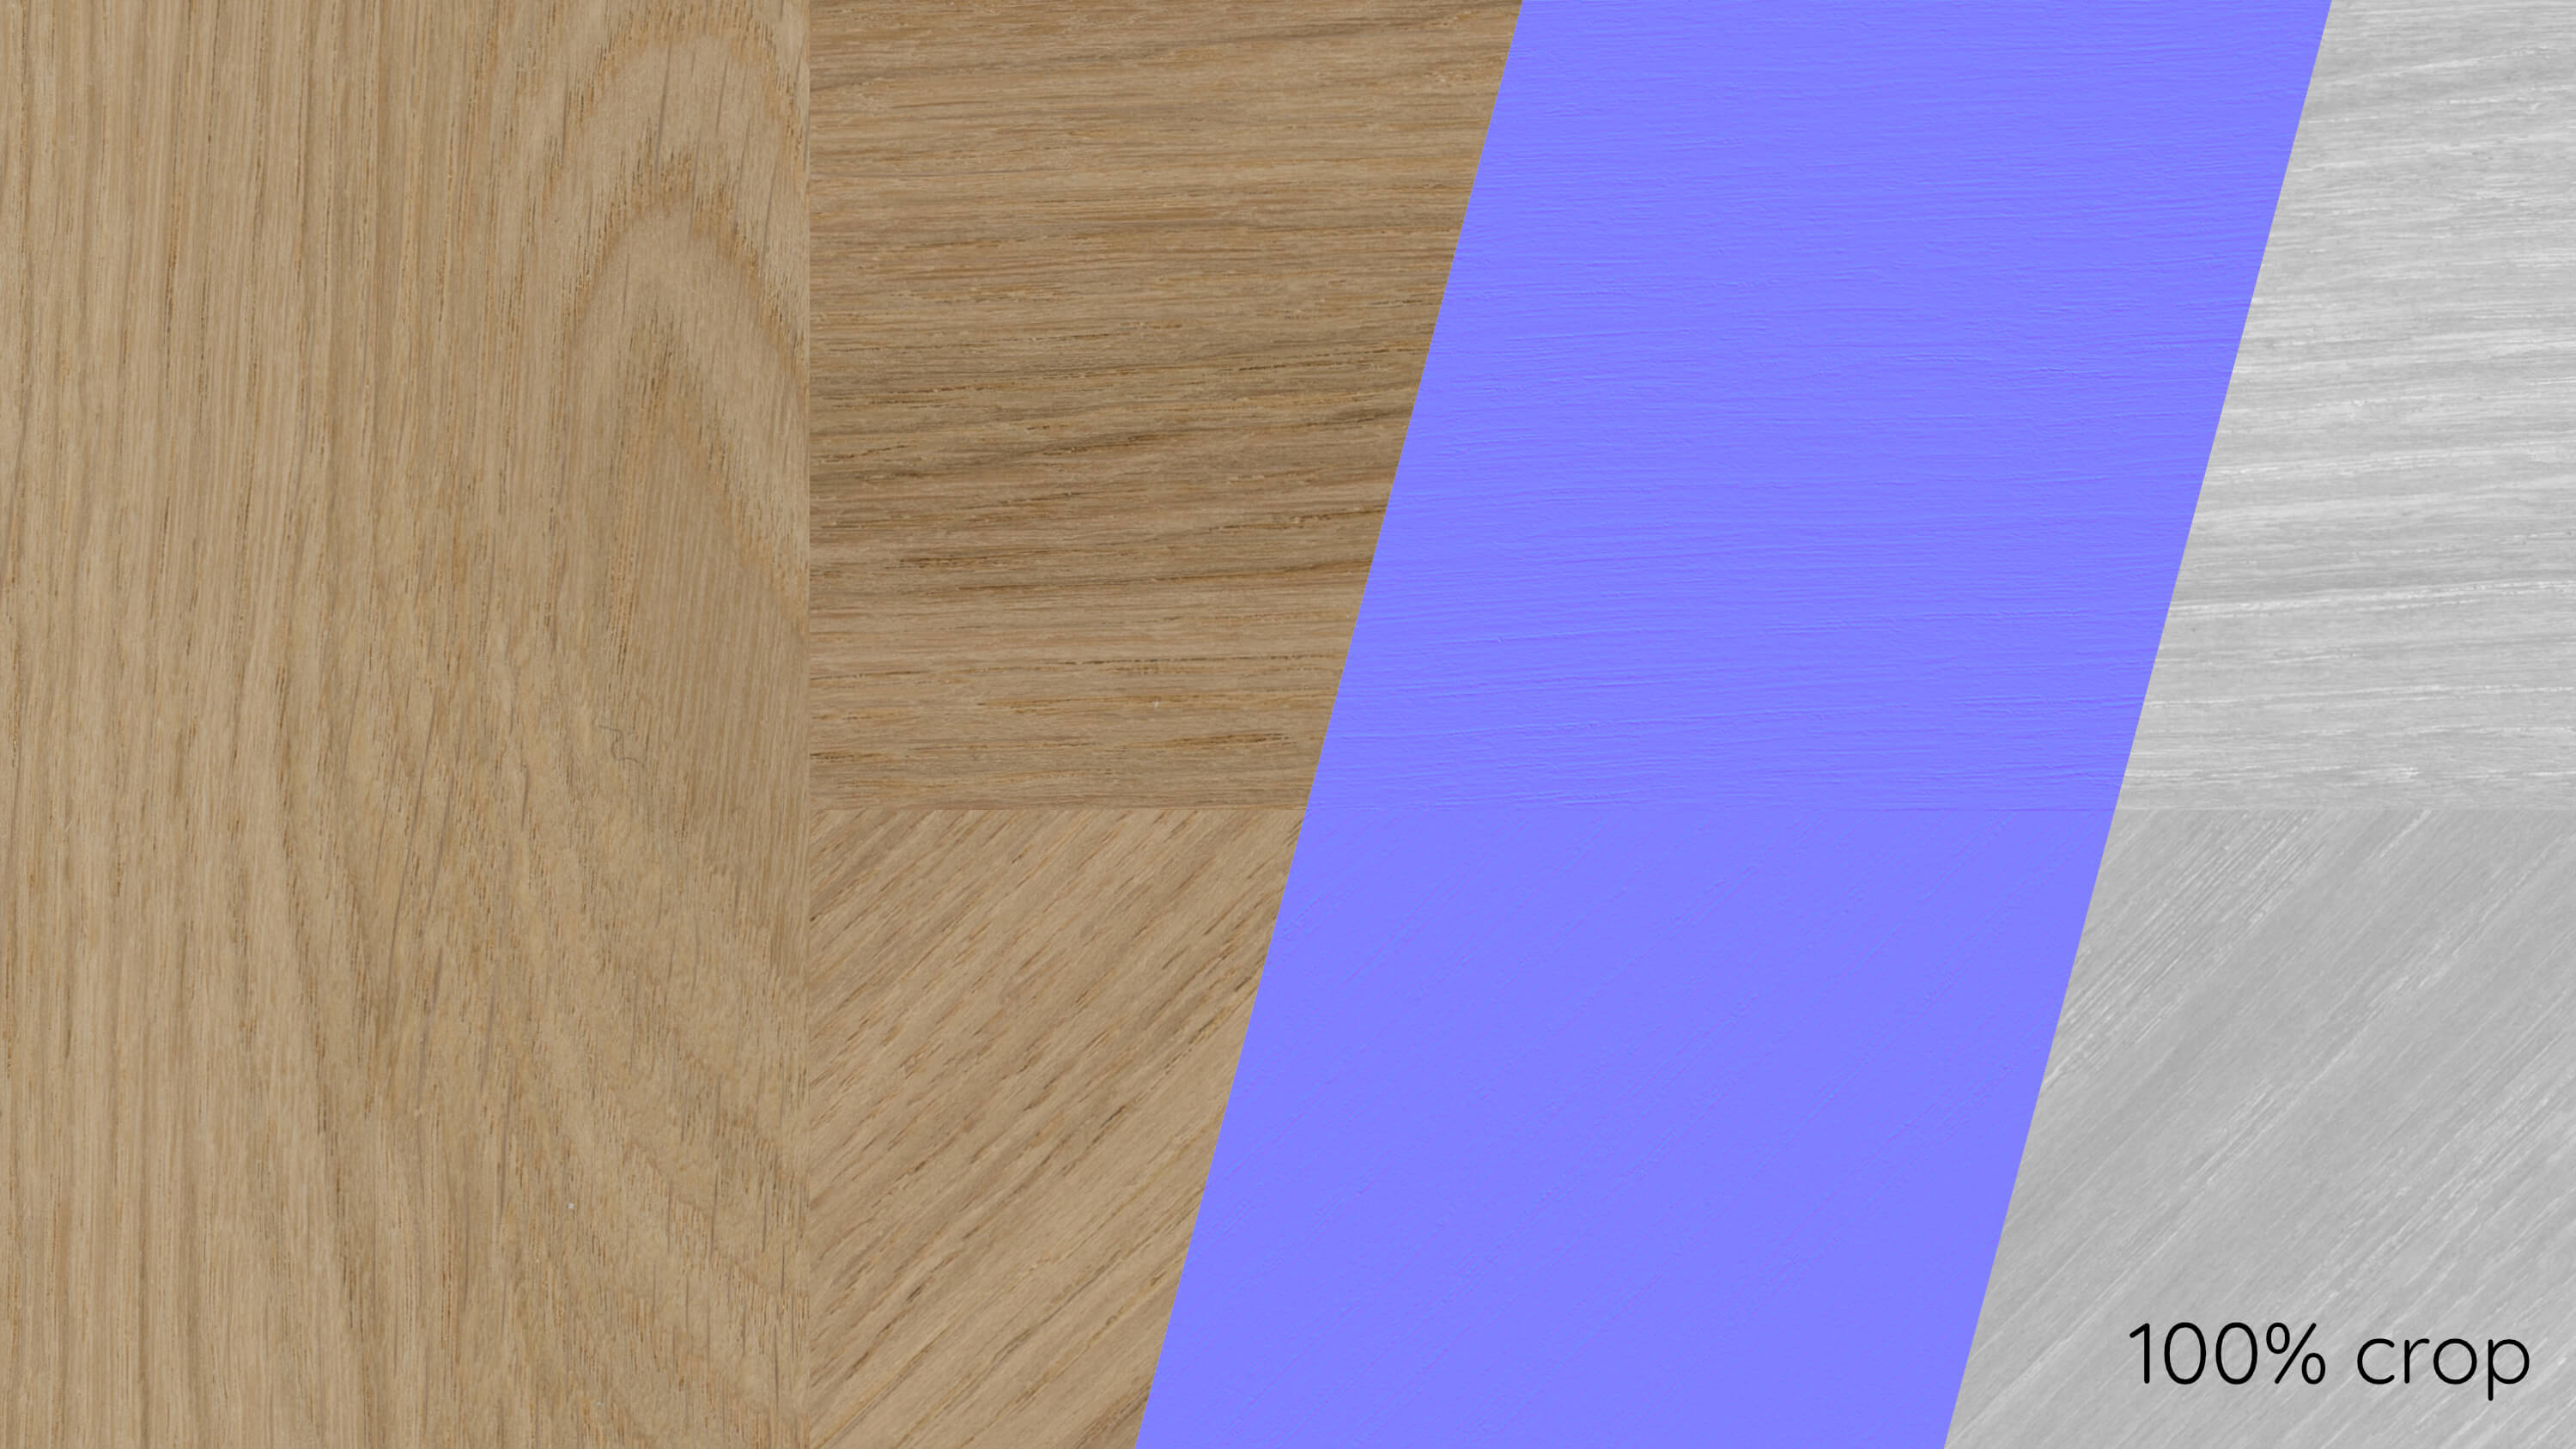 seamless oak floor texture